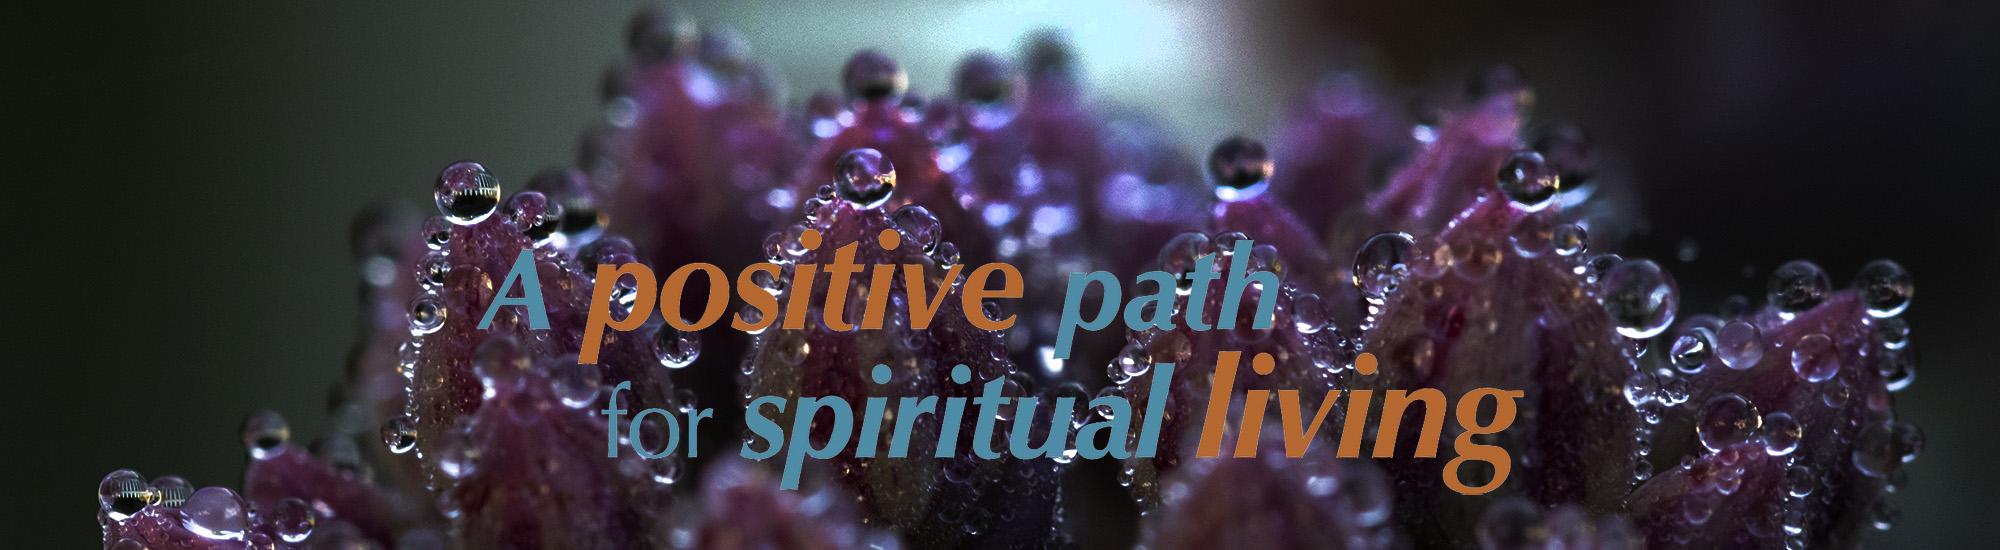 A Positive Path for Spiritual Living.